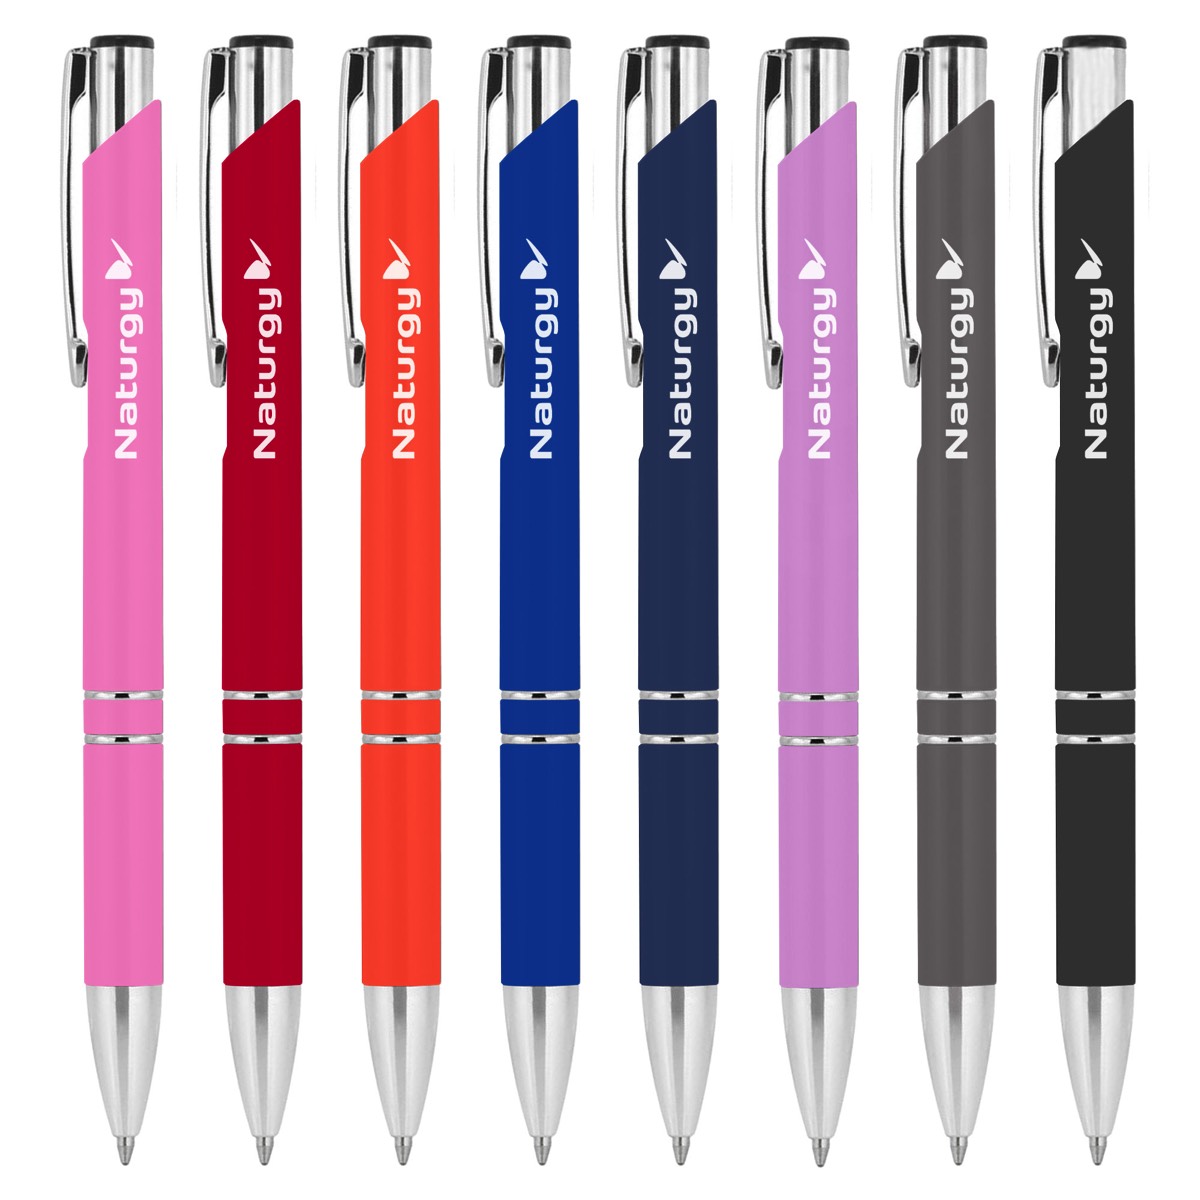 elevate metal pens with printed brand